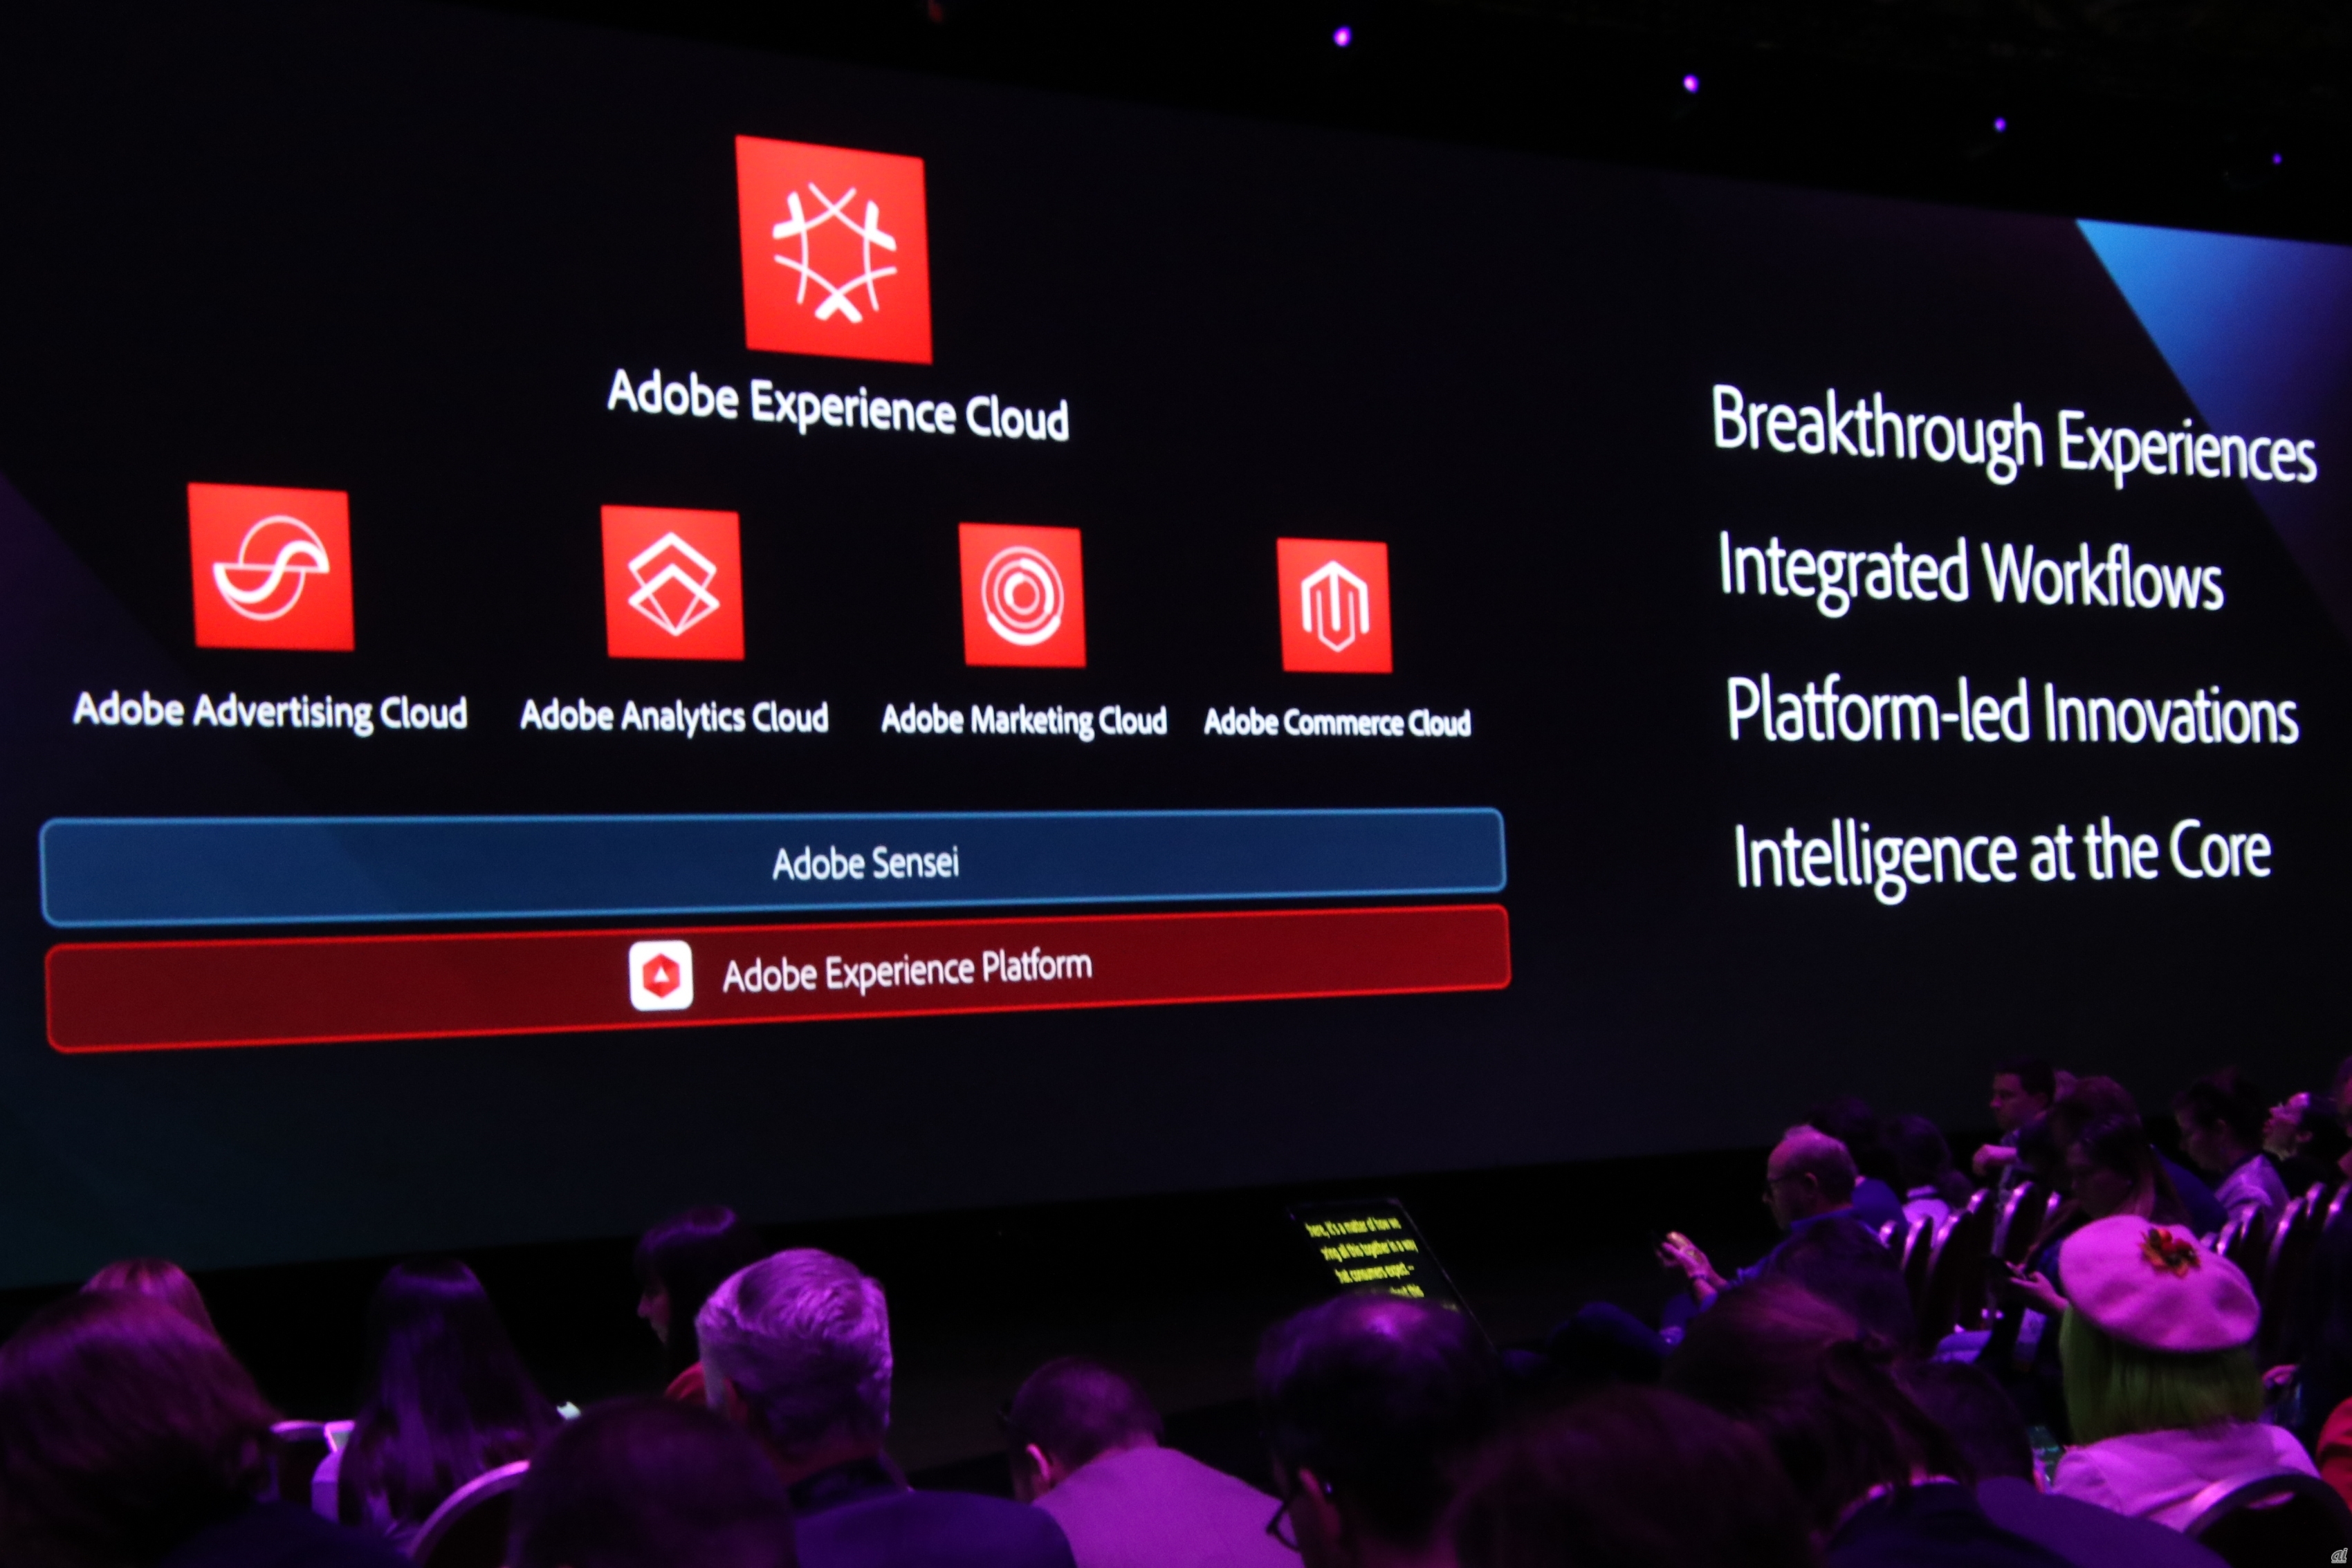 Adobe Experience Platformは、Adobe Experience Cloudnoの基盤。そのうえに各ソリューションがある